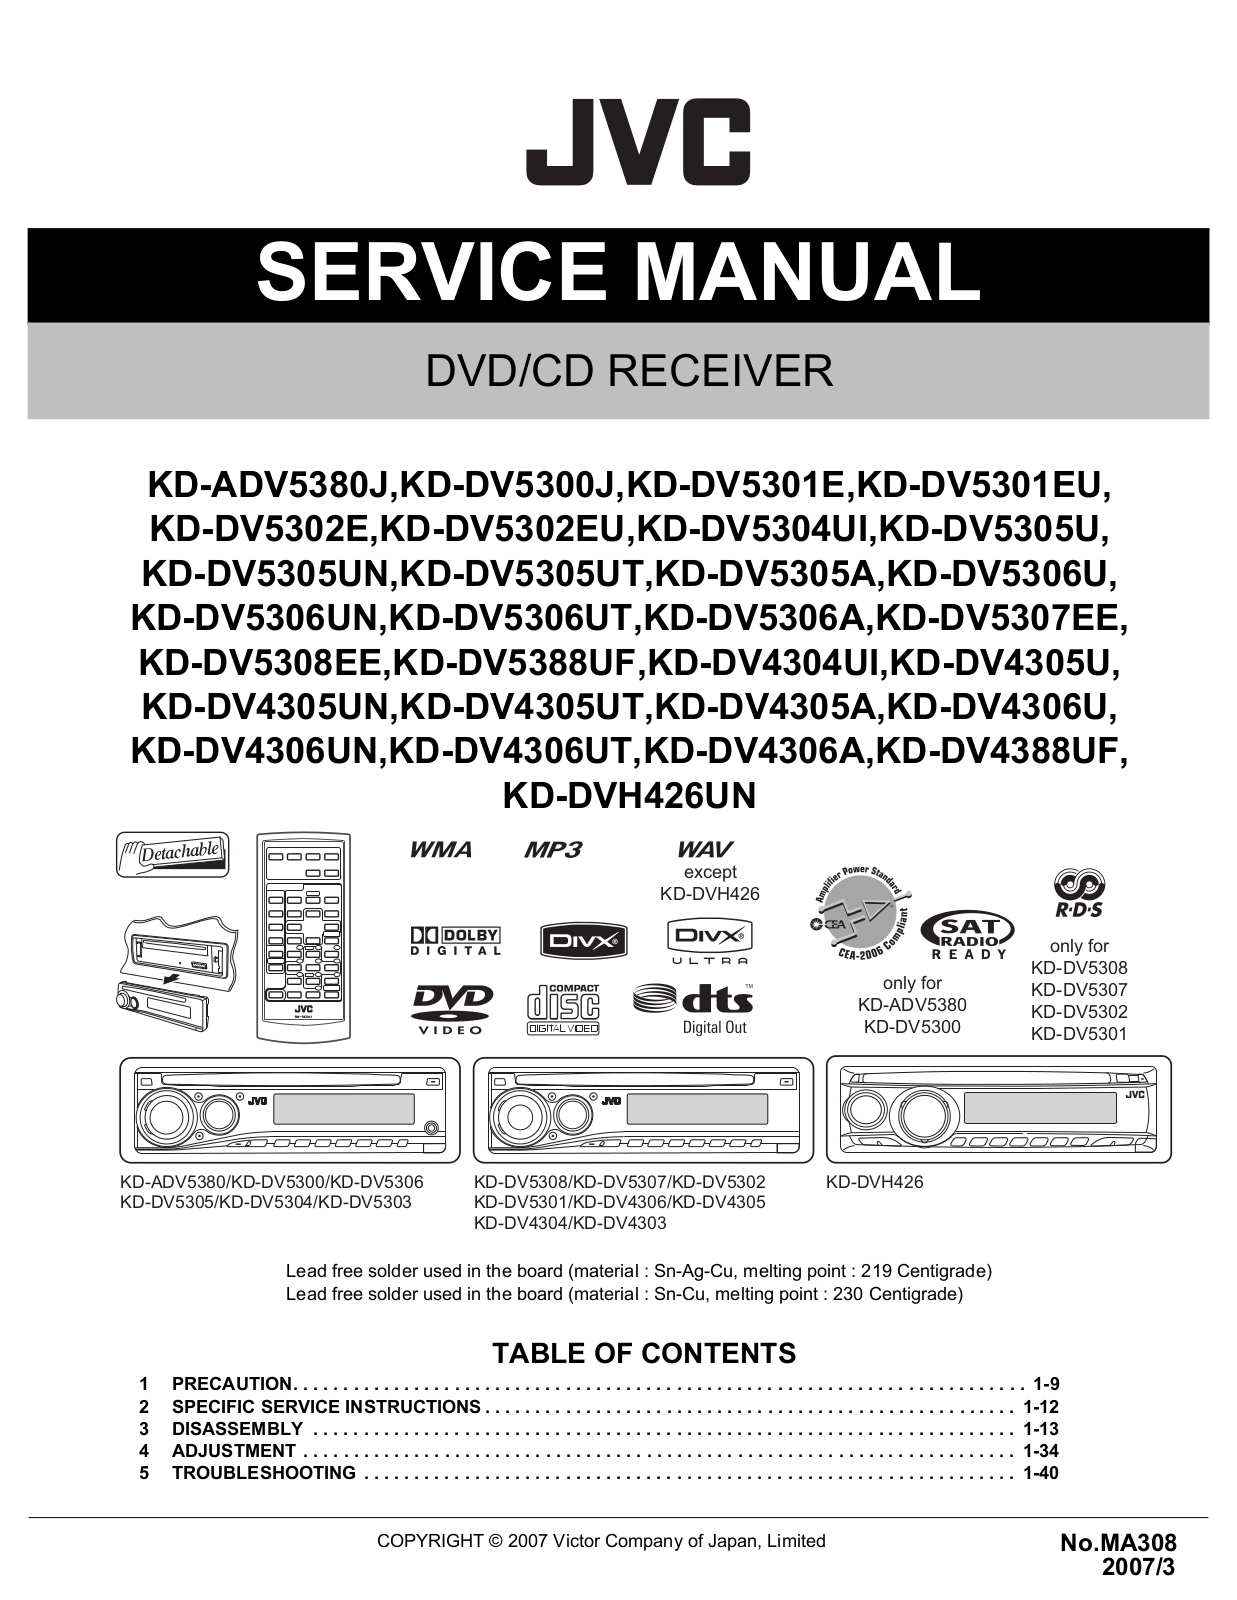 Jvc KD-DVH462-UN, KD-DV5308-EE, KD-DV5307-EE, KD-DV5306-UT, KD-DV5306-UN Service Manual